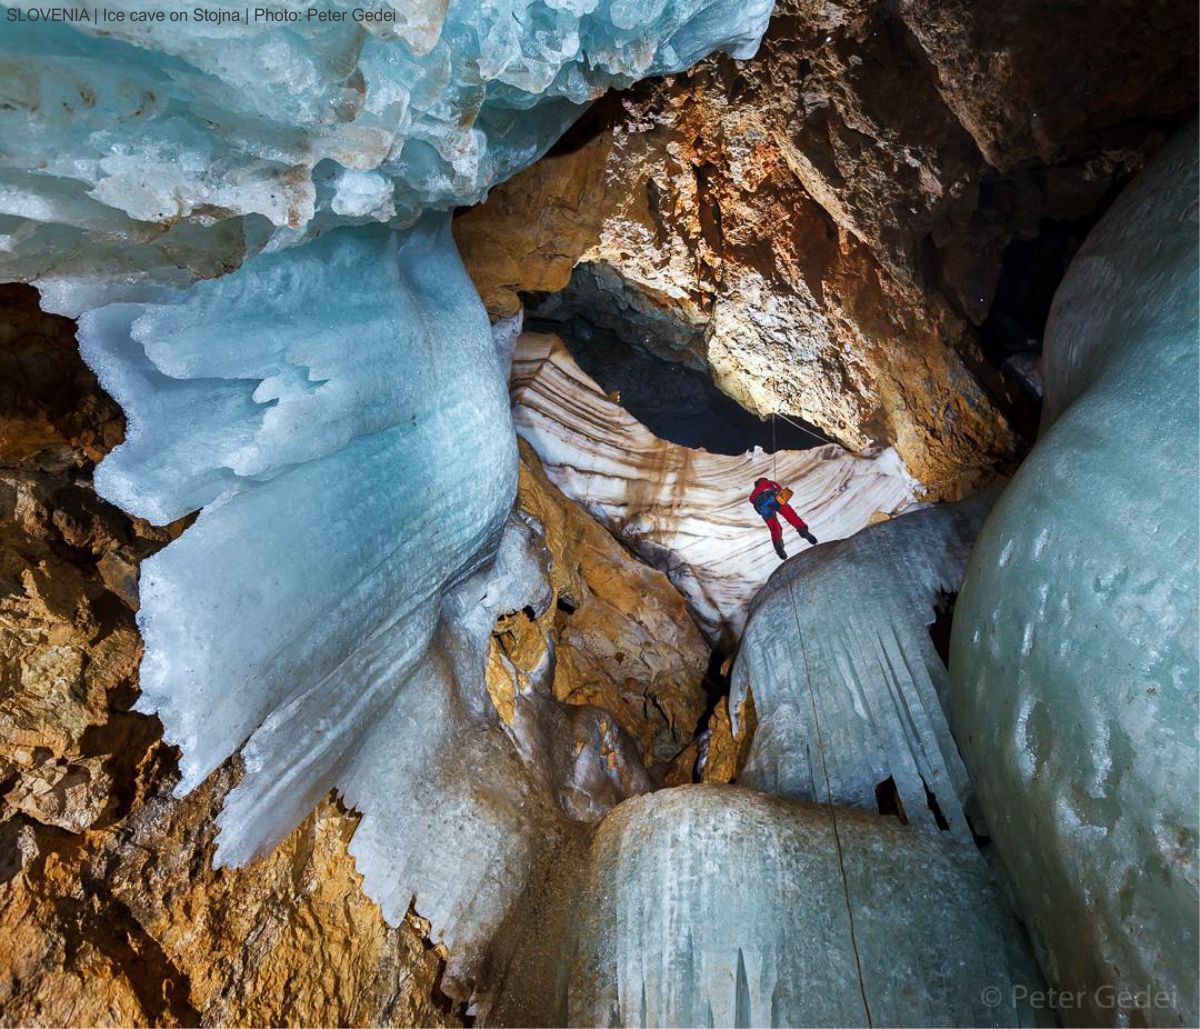 2016-11-05 SLOVENIA - Ice cave on Stojna - Peter Gedei